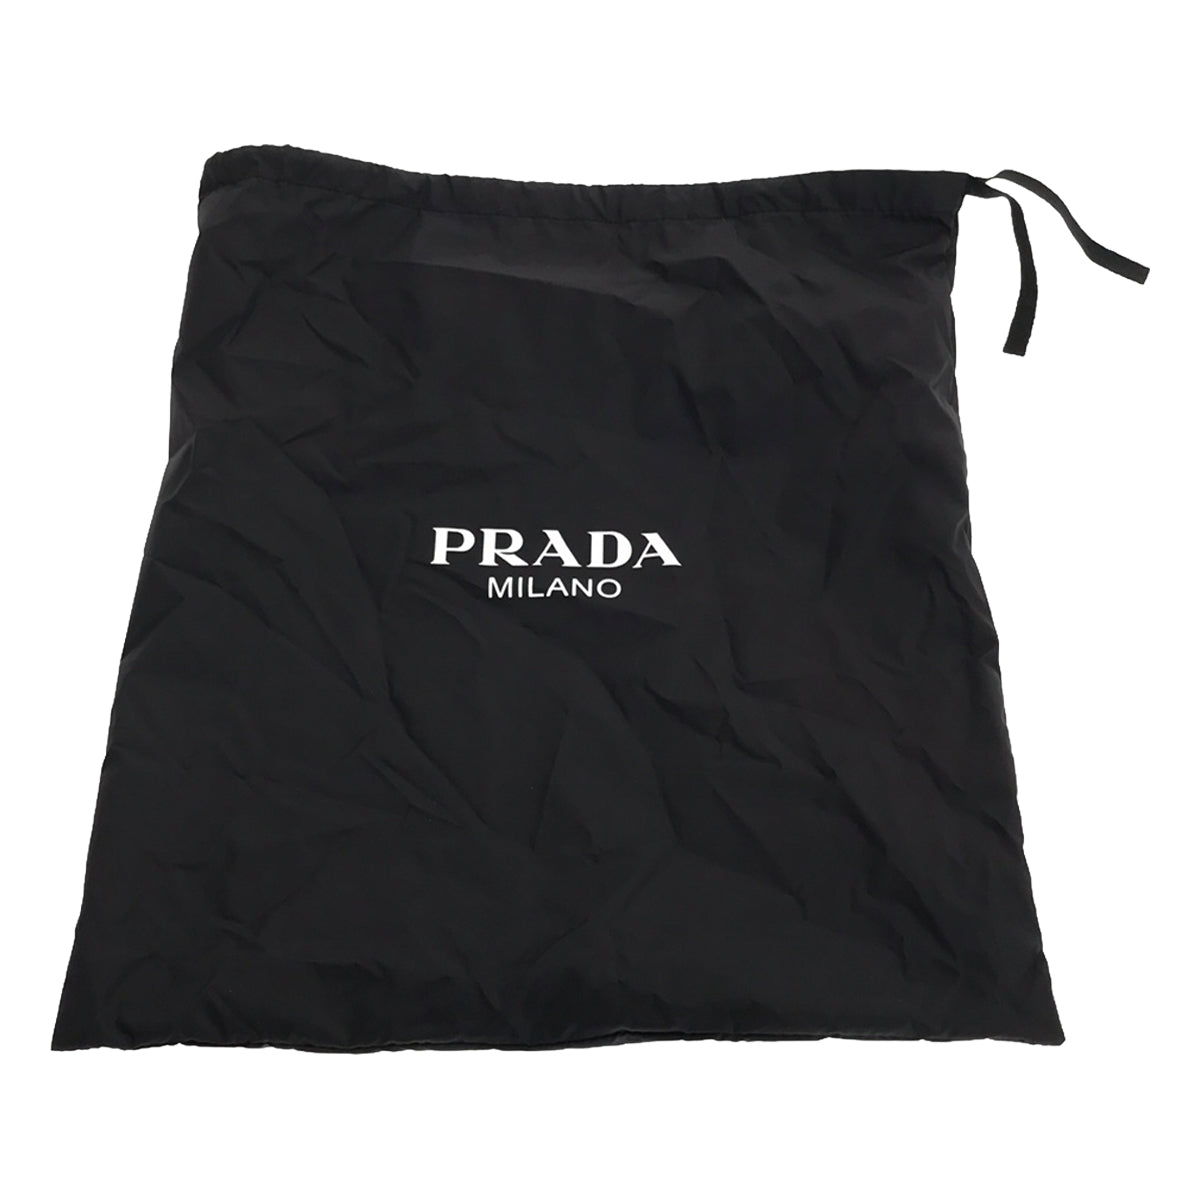 PRADA(プラダ)ロゴプレート付きウール黒パンツ36サイズ(XS)2022年冬-